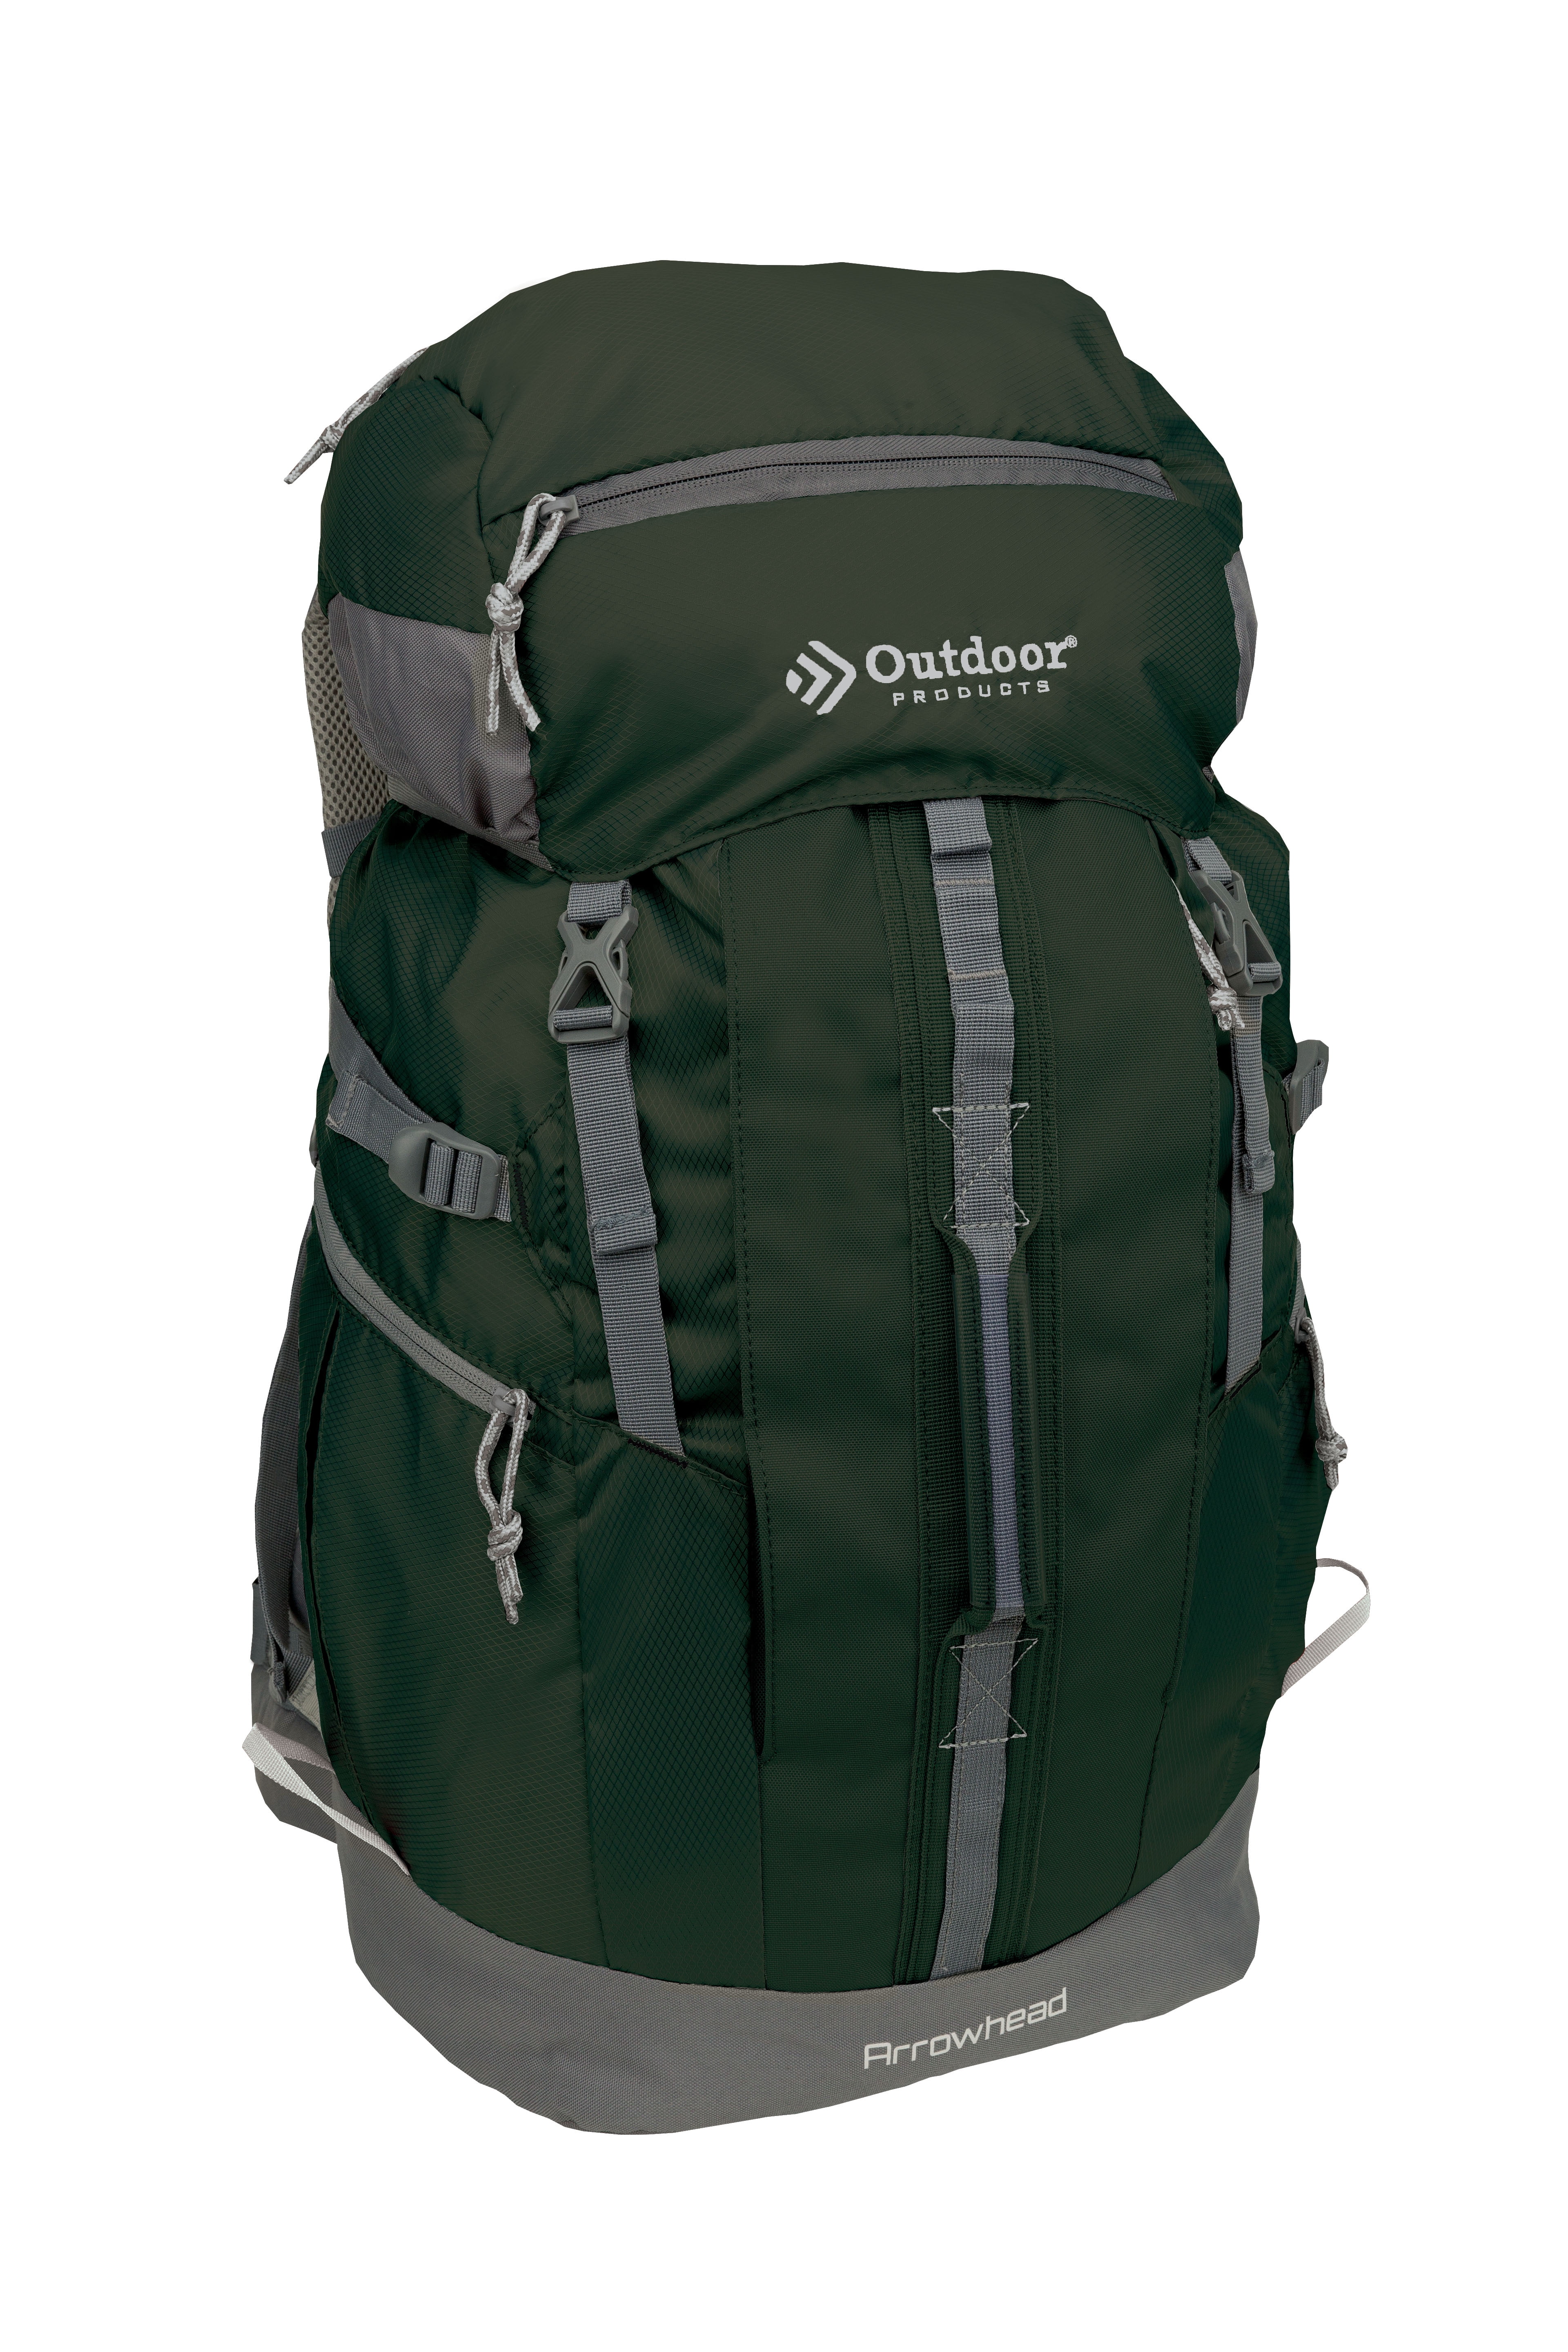 Outdoor Backpacks Outdoor Products Arrowhead 47 Ltr Hiking Backpack, Internal Frame, Green,  Unisex - Walmart.com